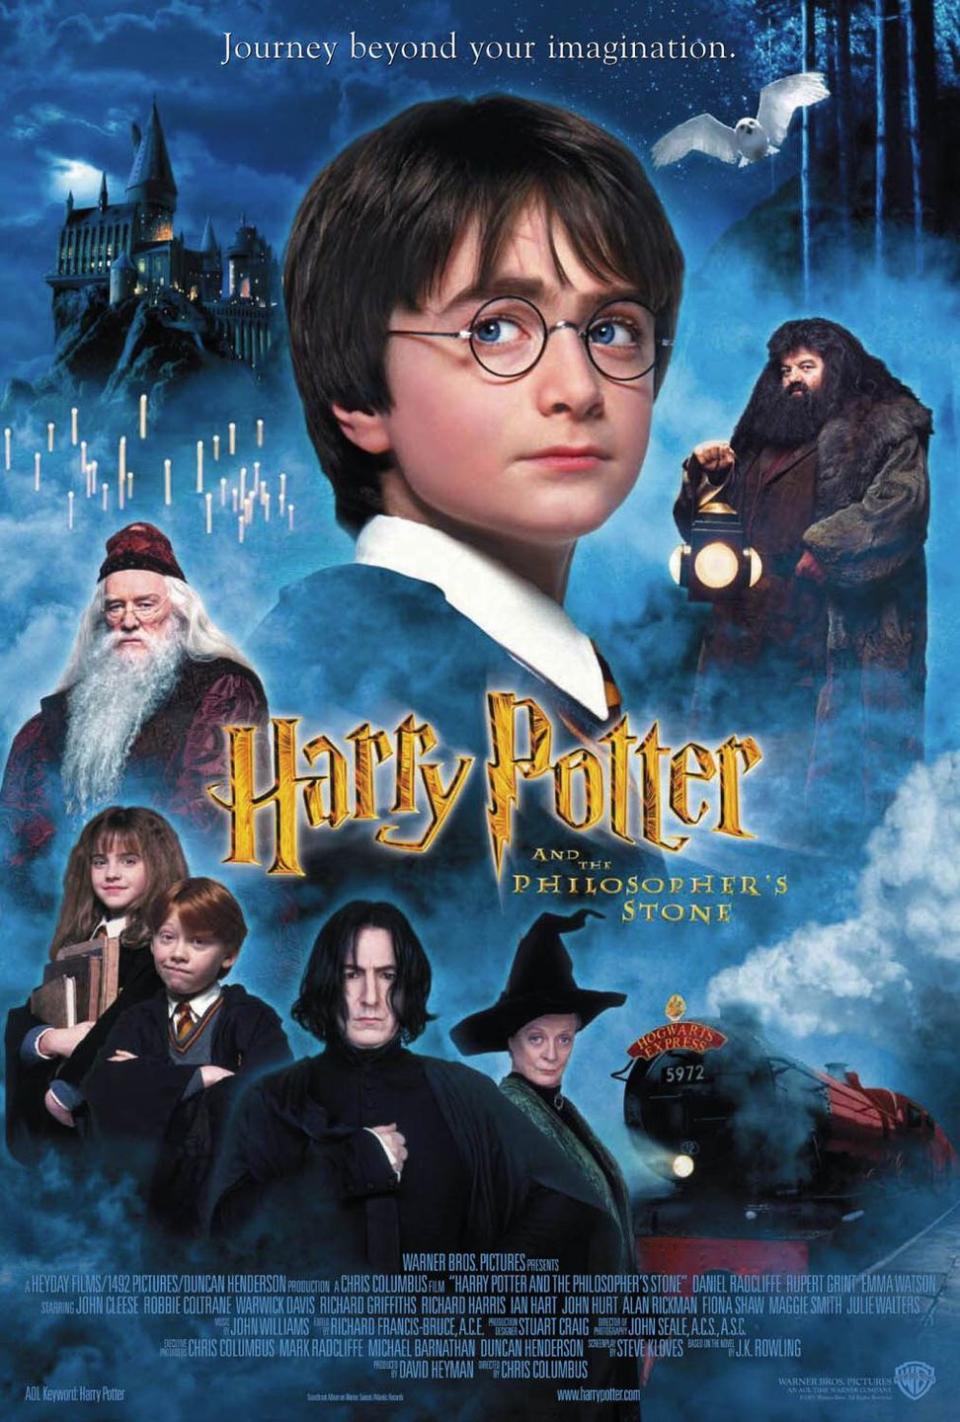 29) Harry Potter Series